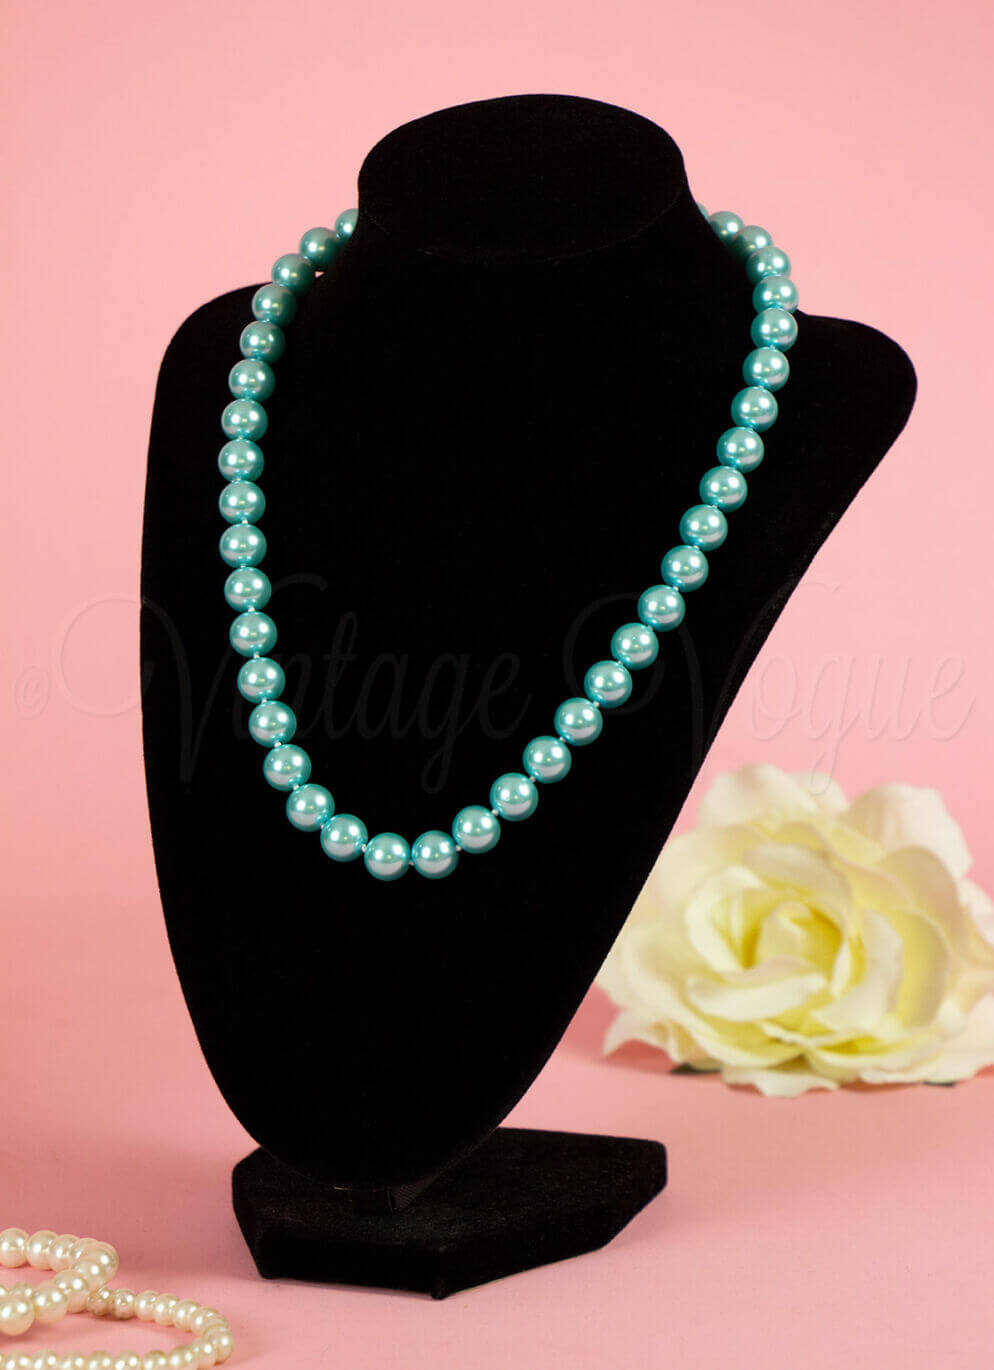 Forever Fifties 50er Jahre Retro Vintage Perlen Halskette in Türkis